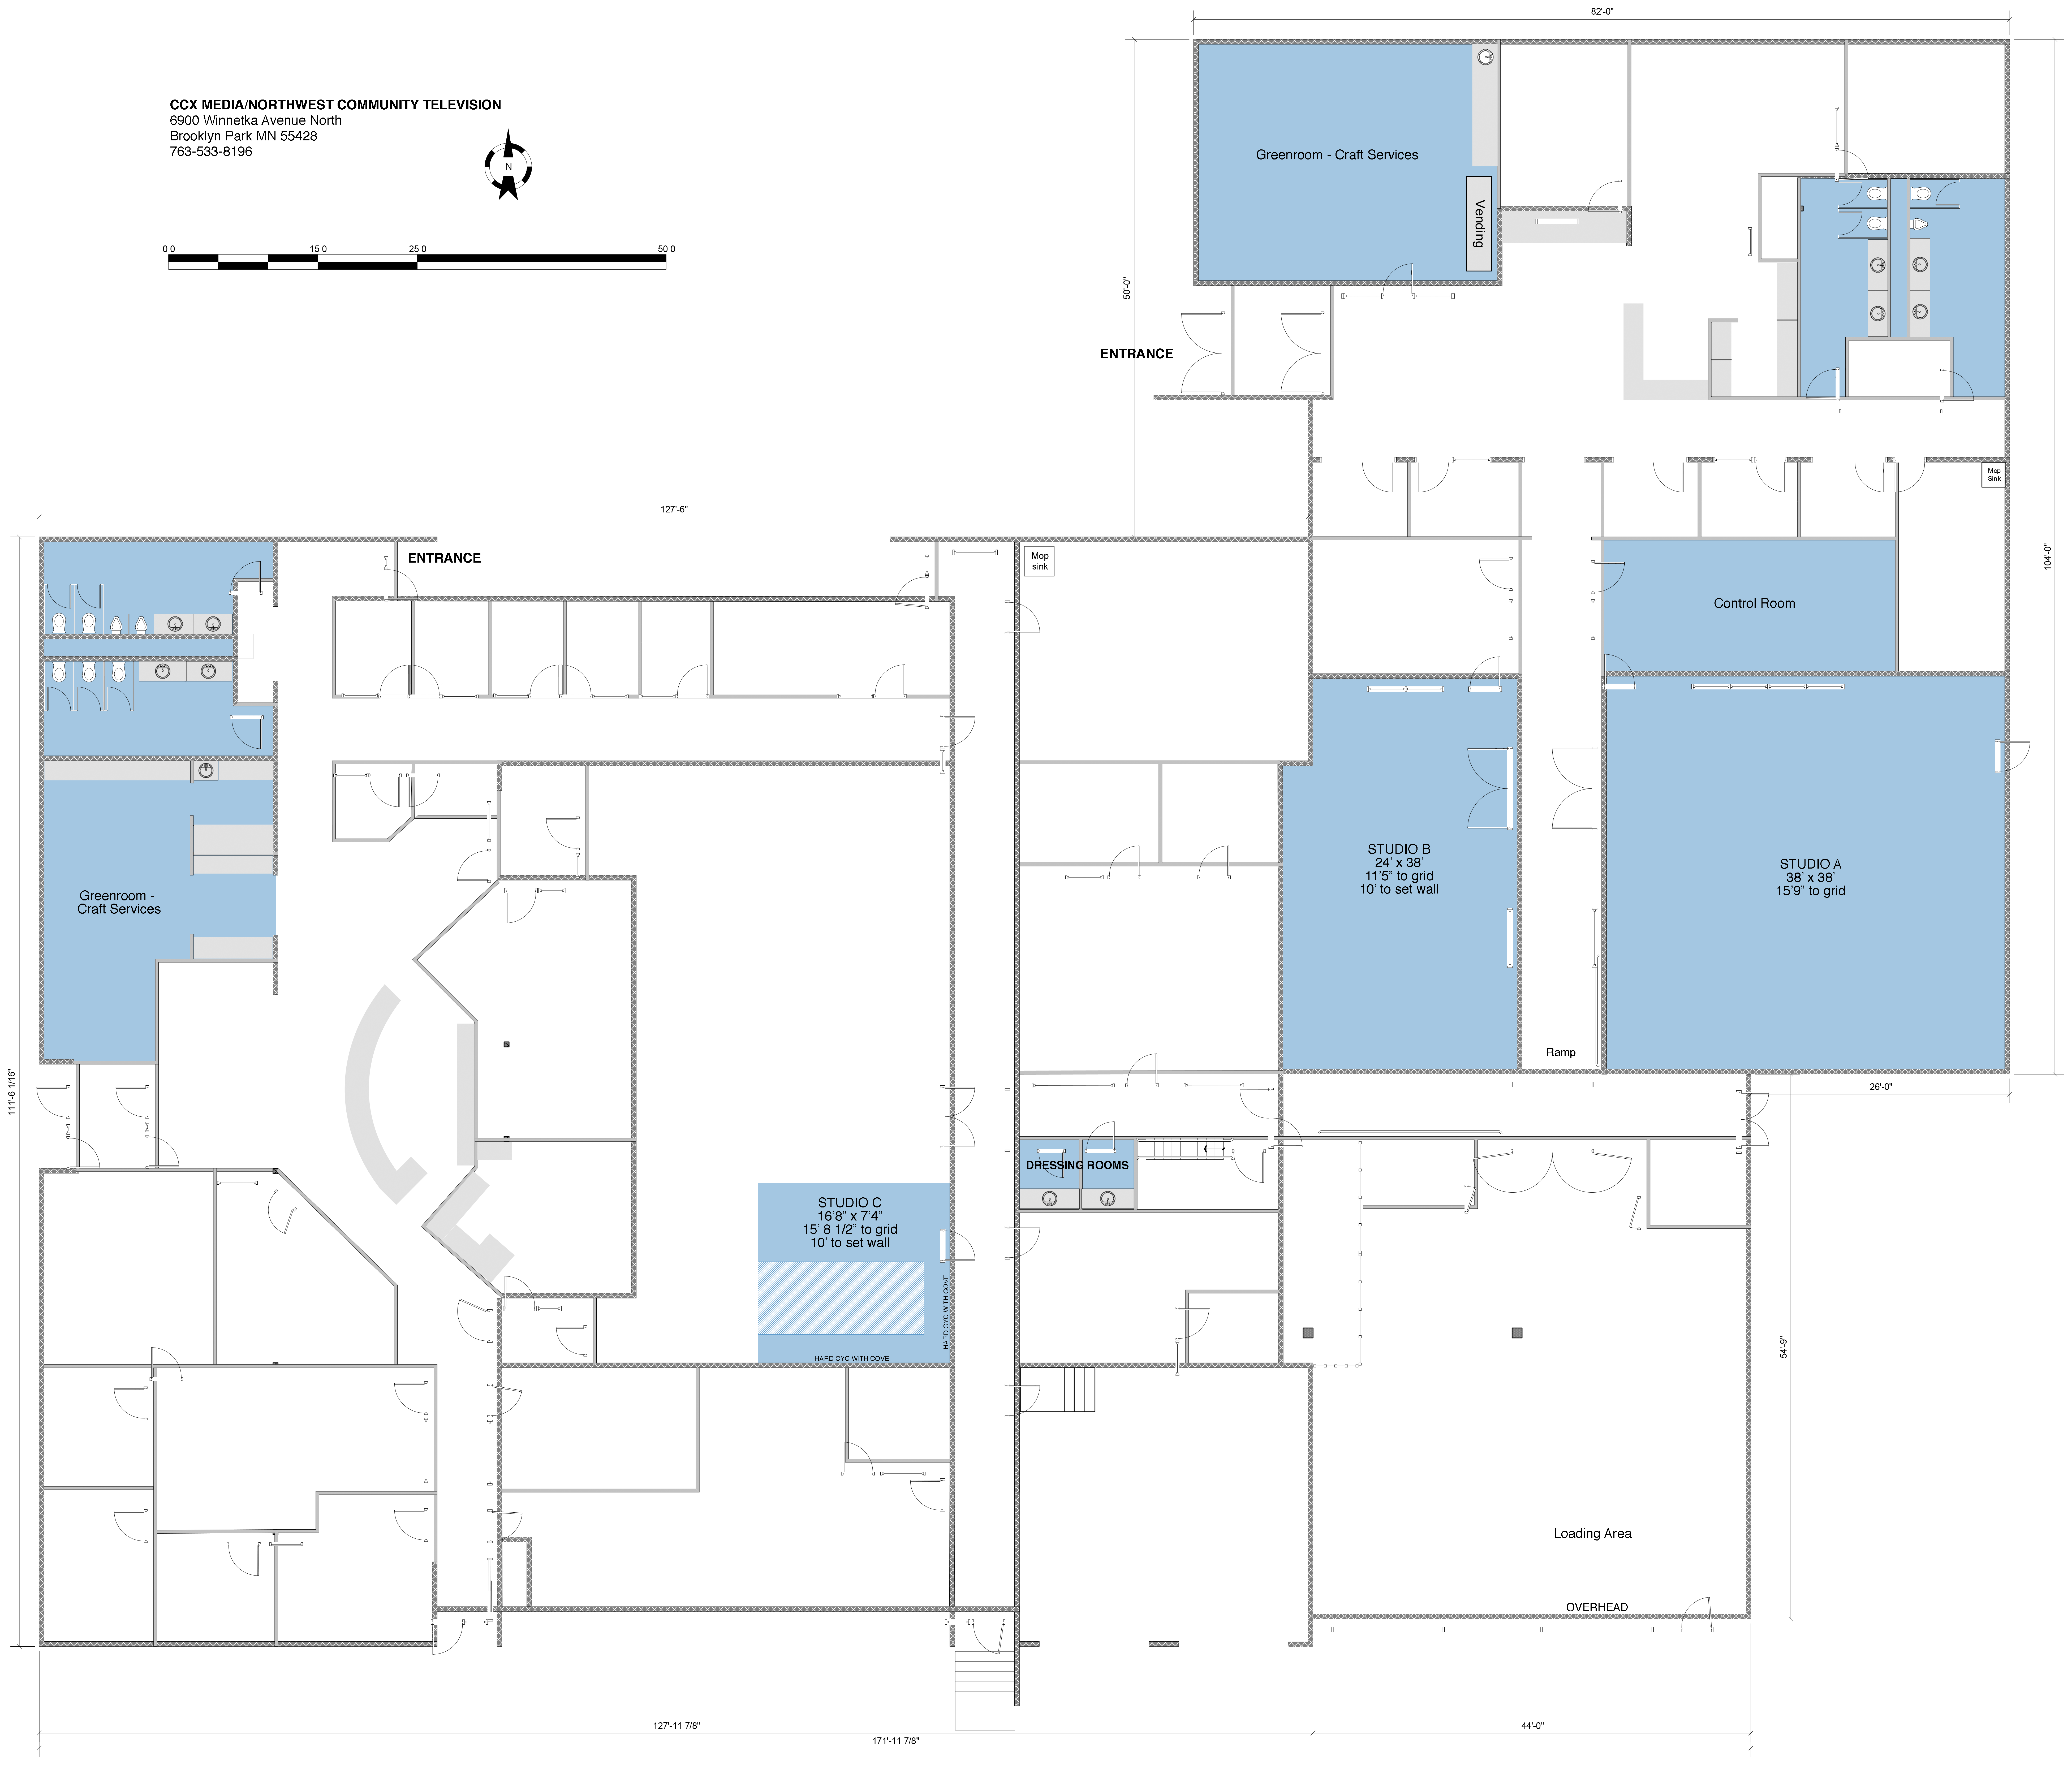 Full CCX Studios Floor Plan